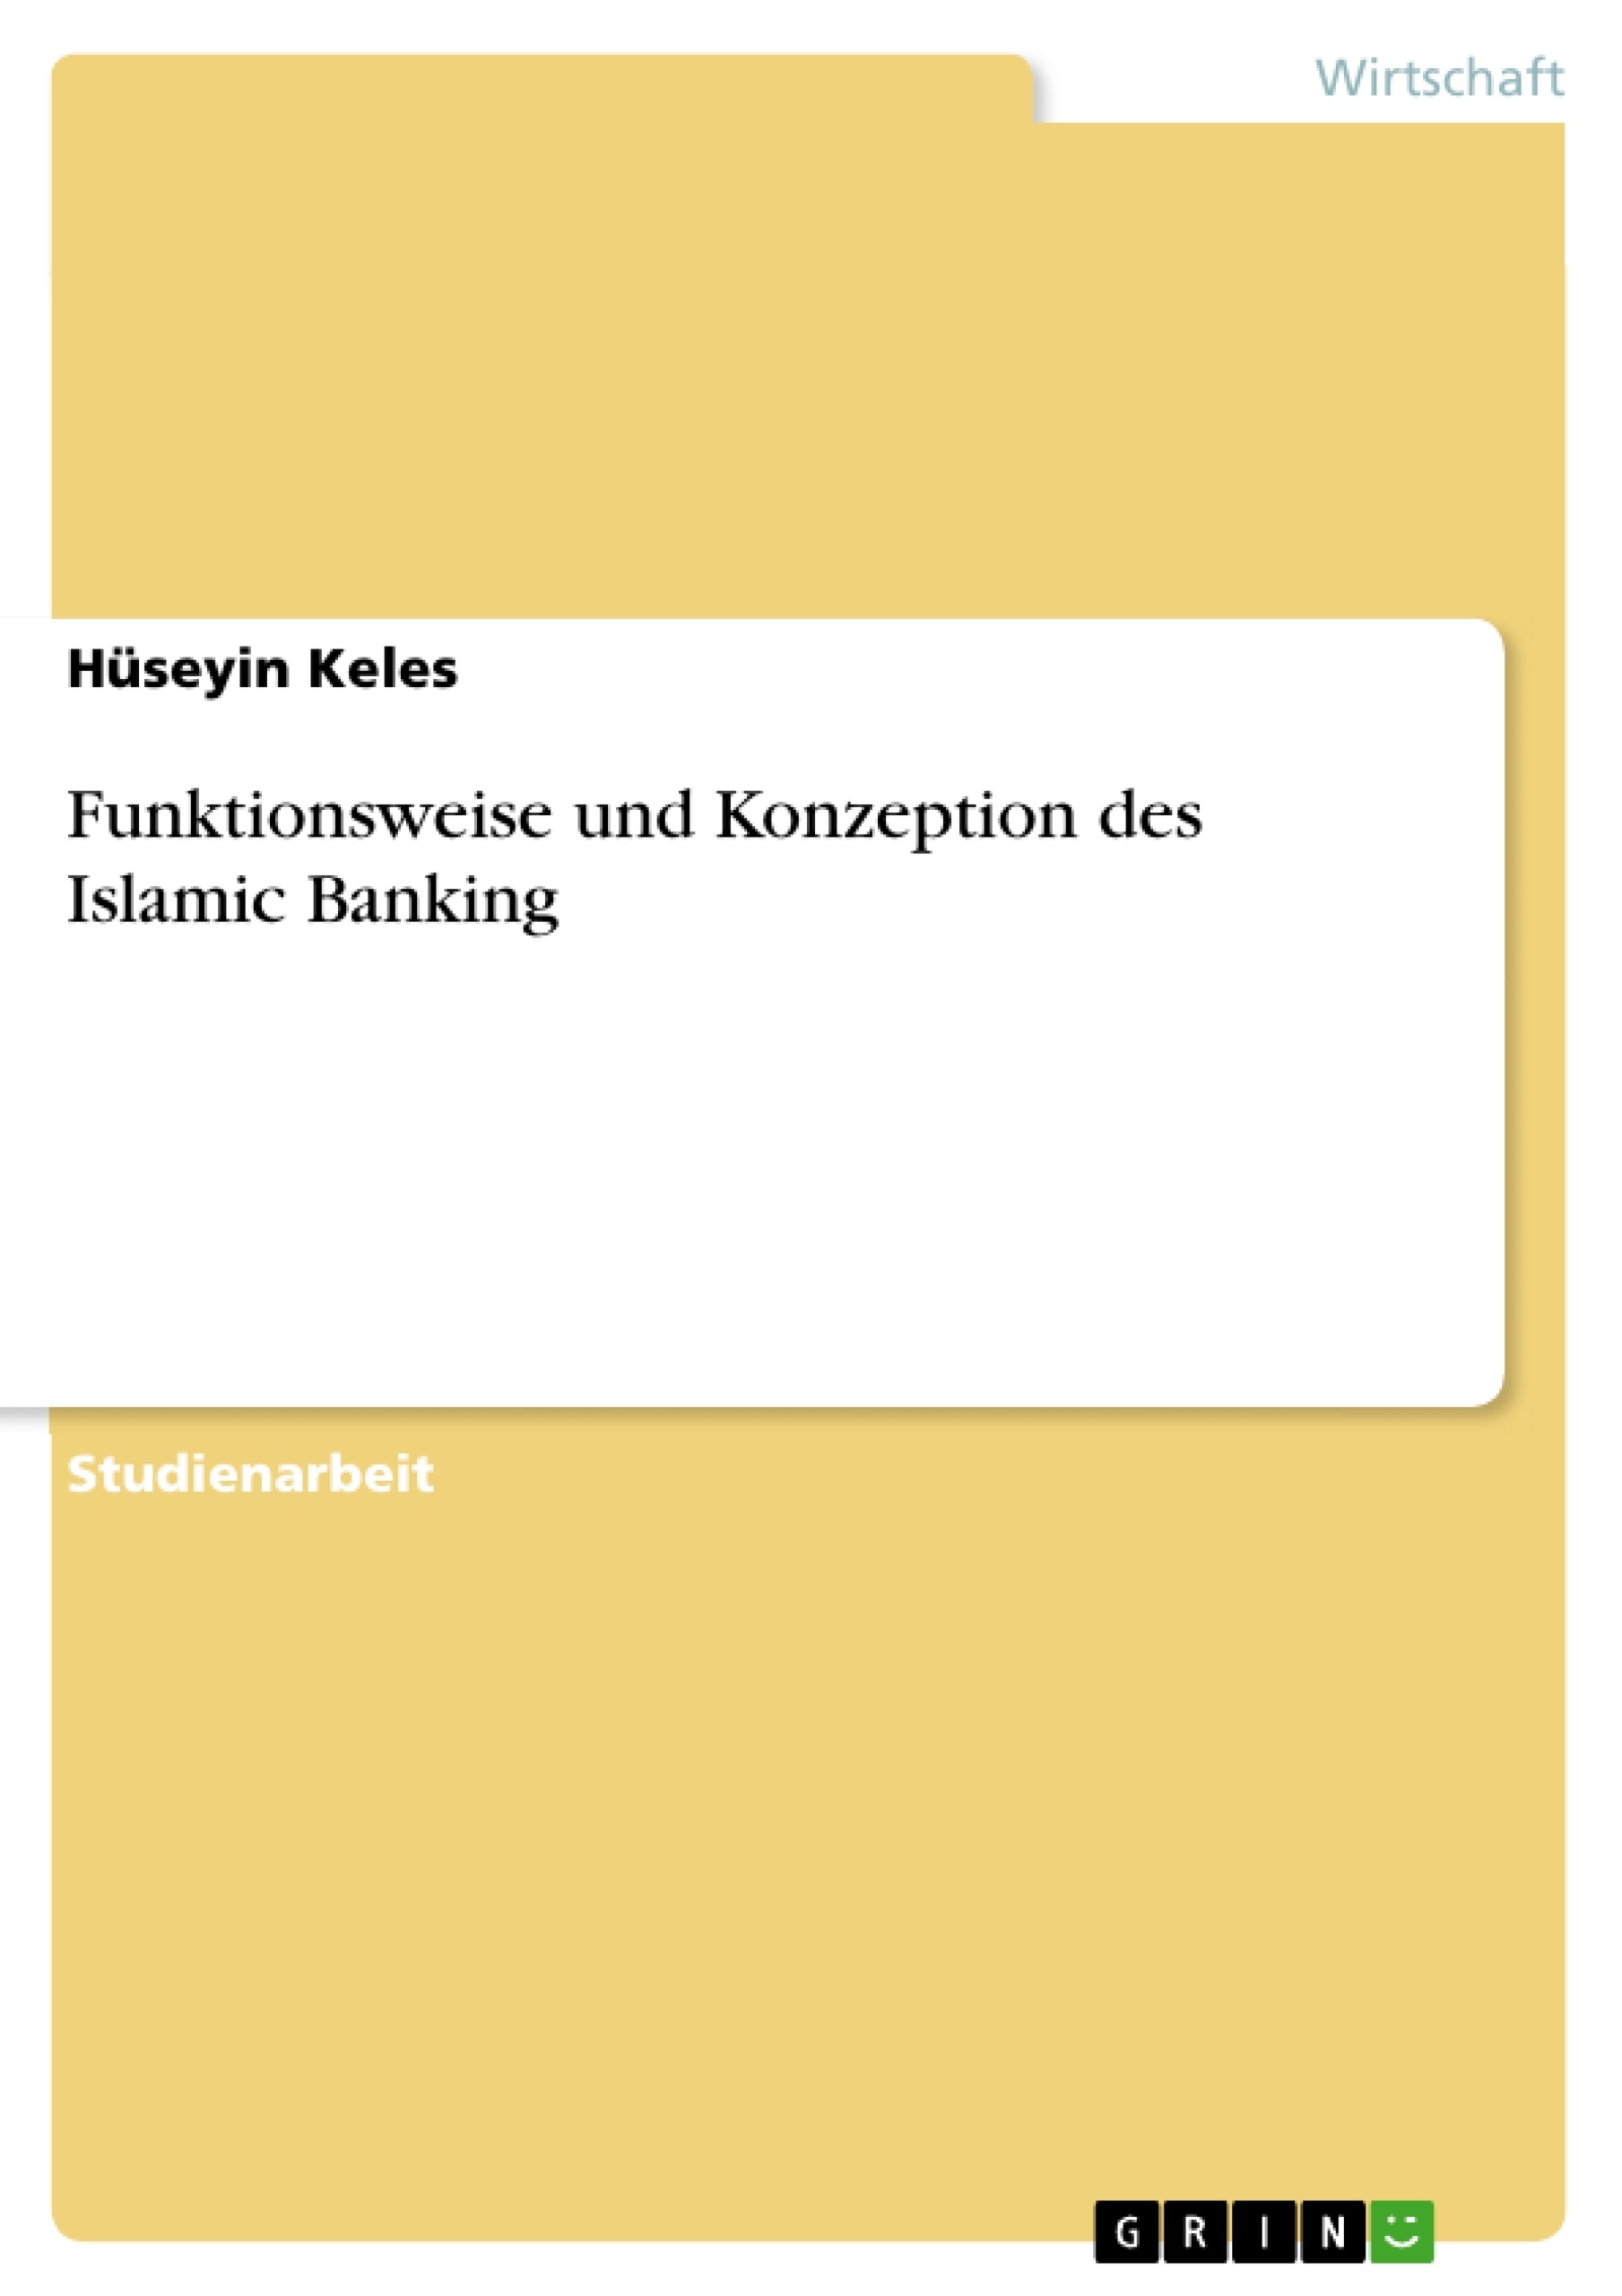 Title: Funktionsweise und Konzeption des Islamic Banking